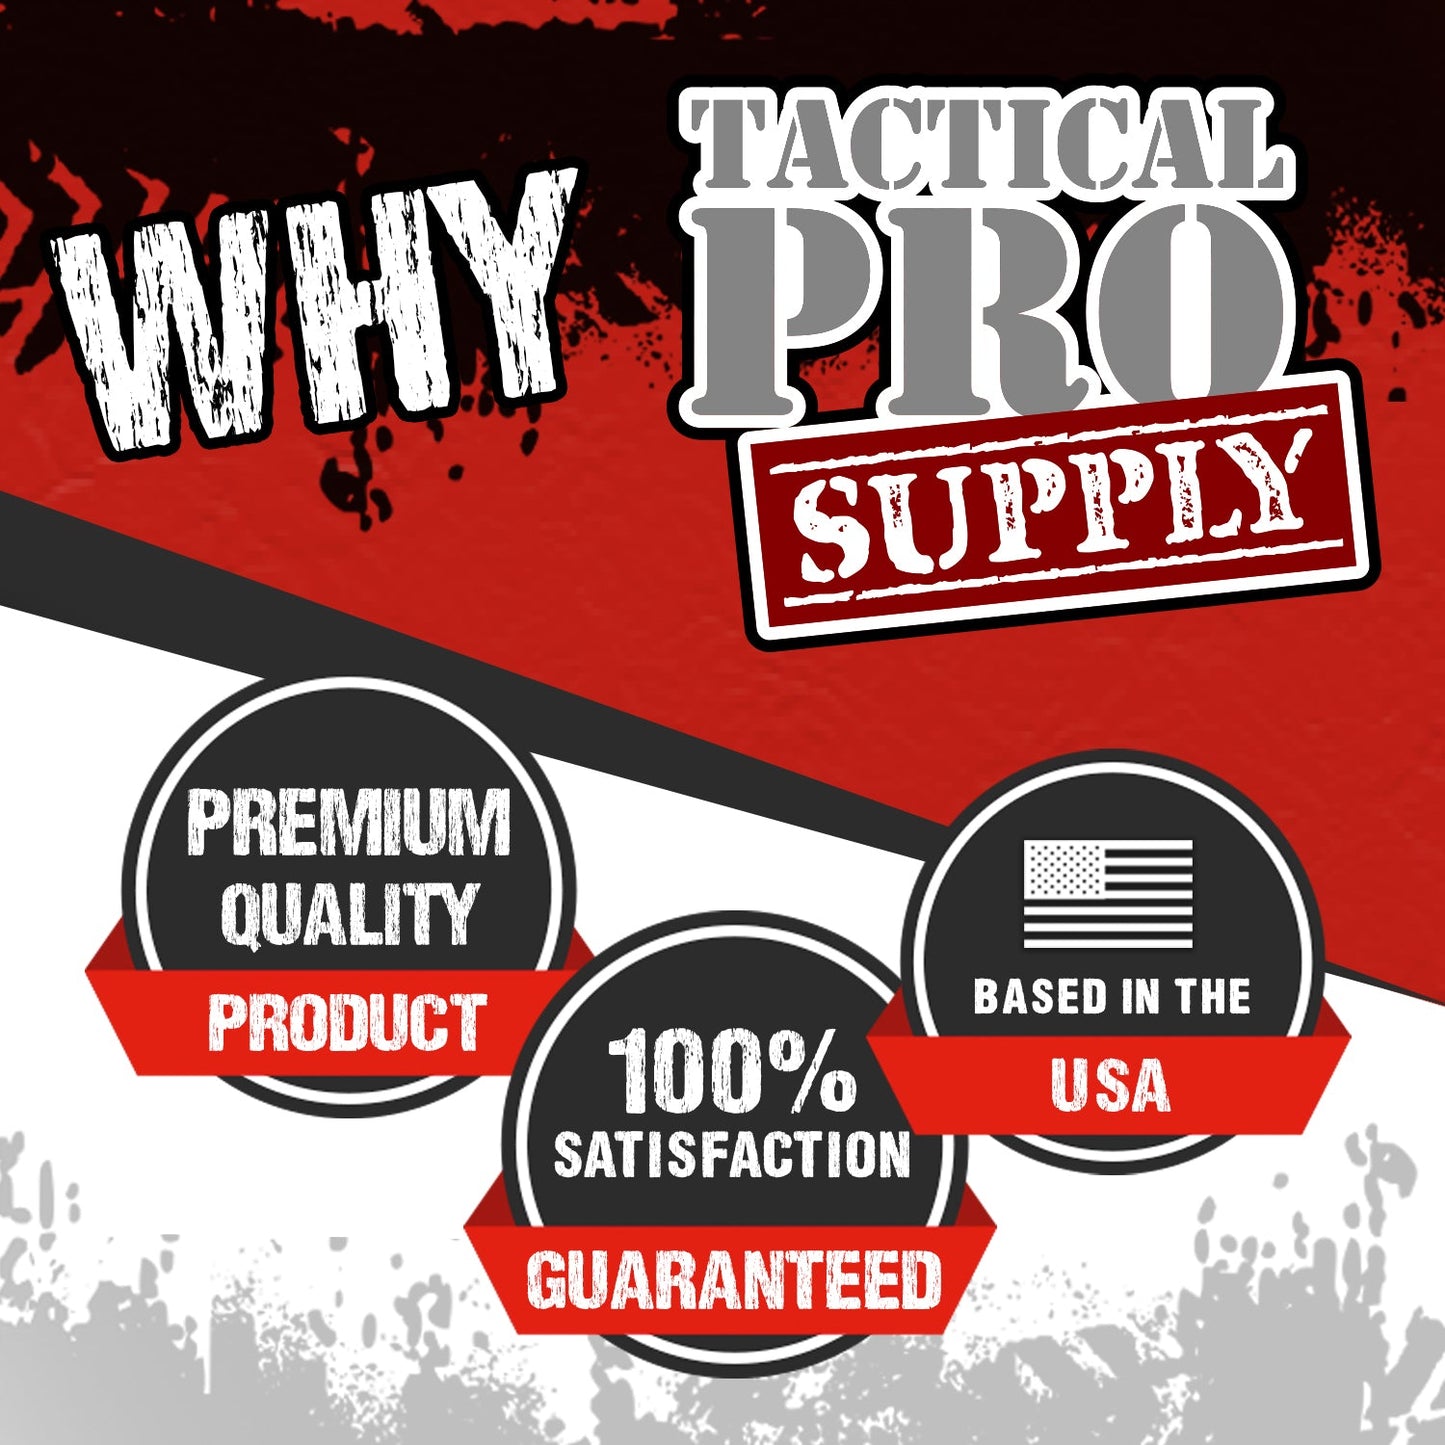 Got Ammo? - Tactical Pro Supply, LLC